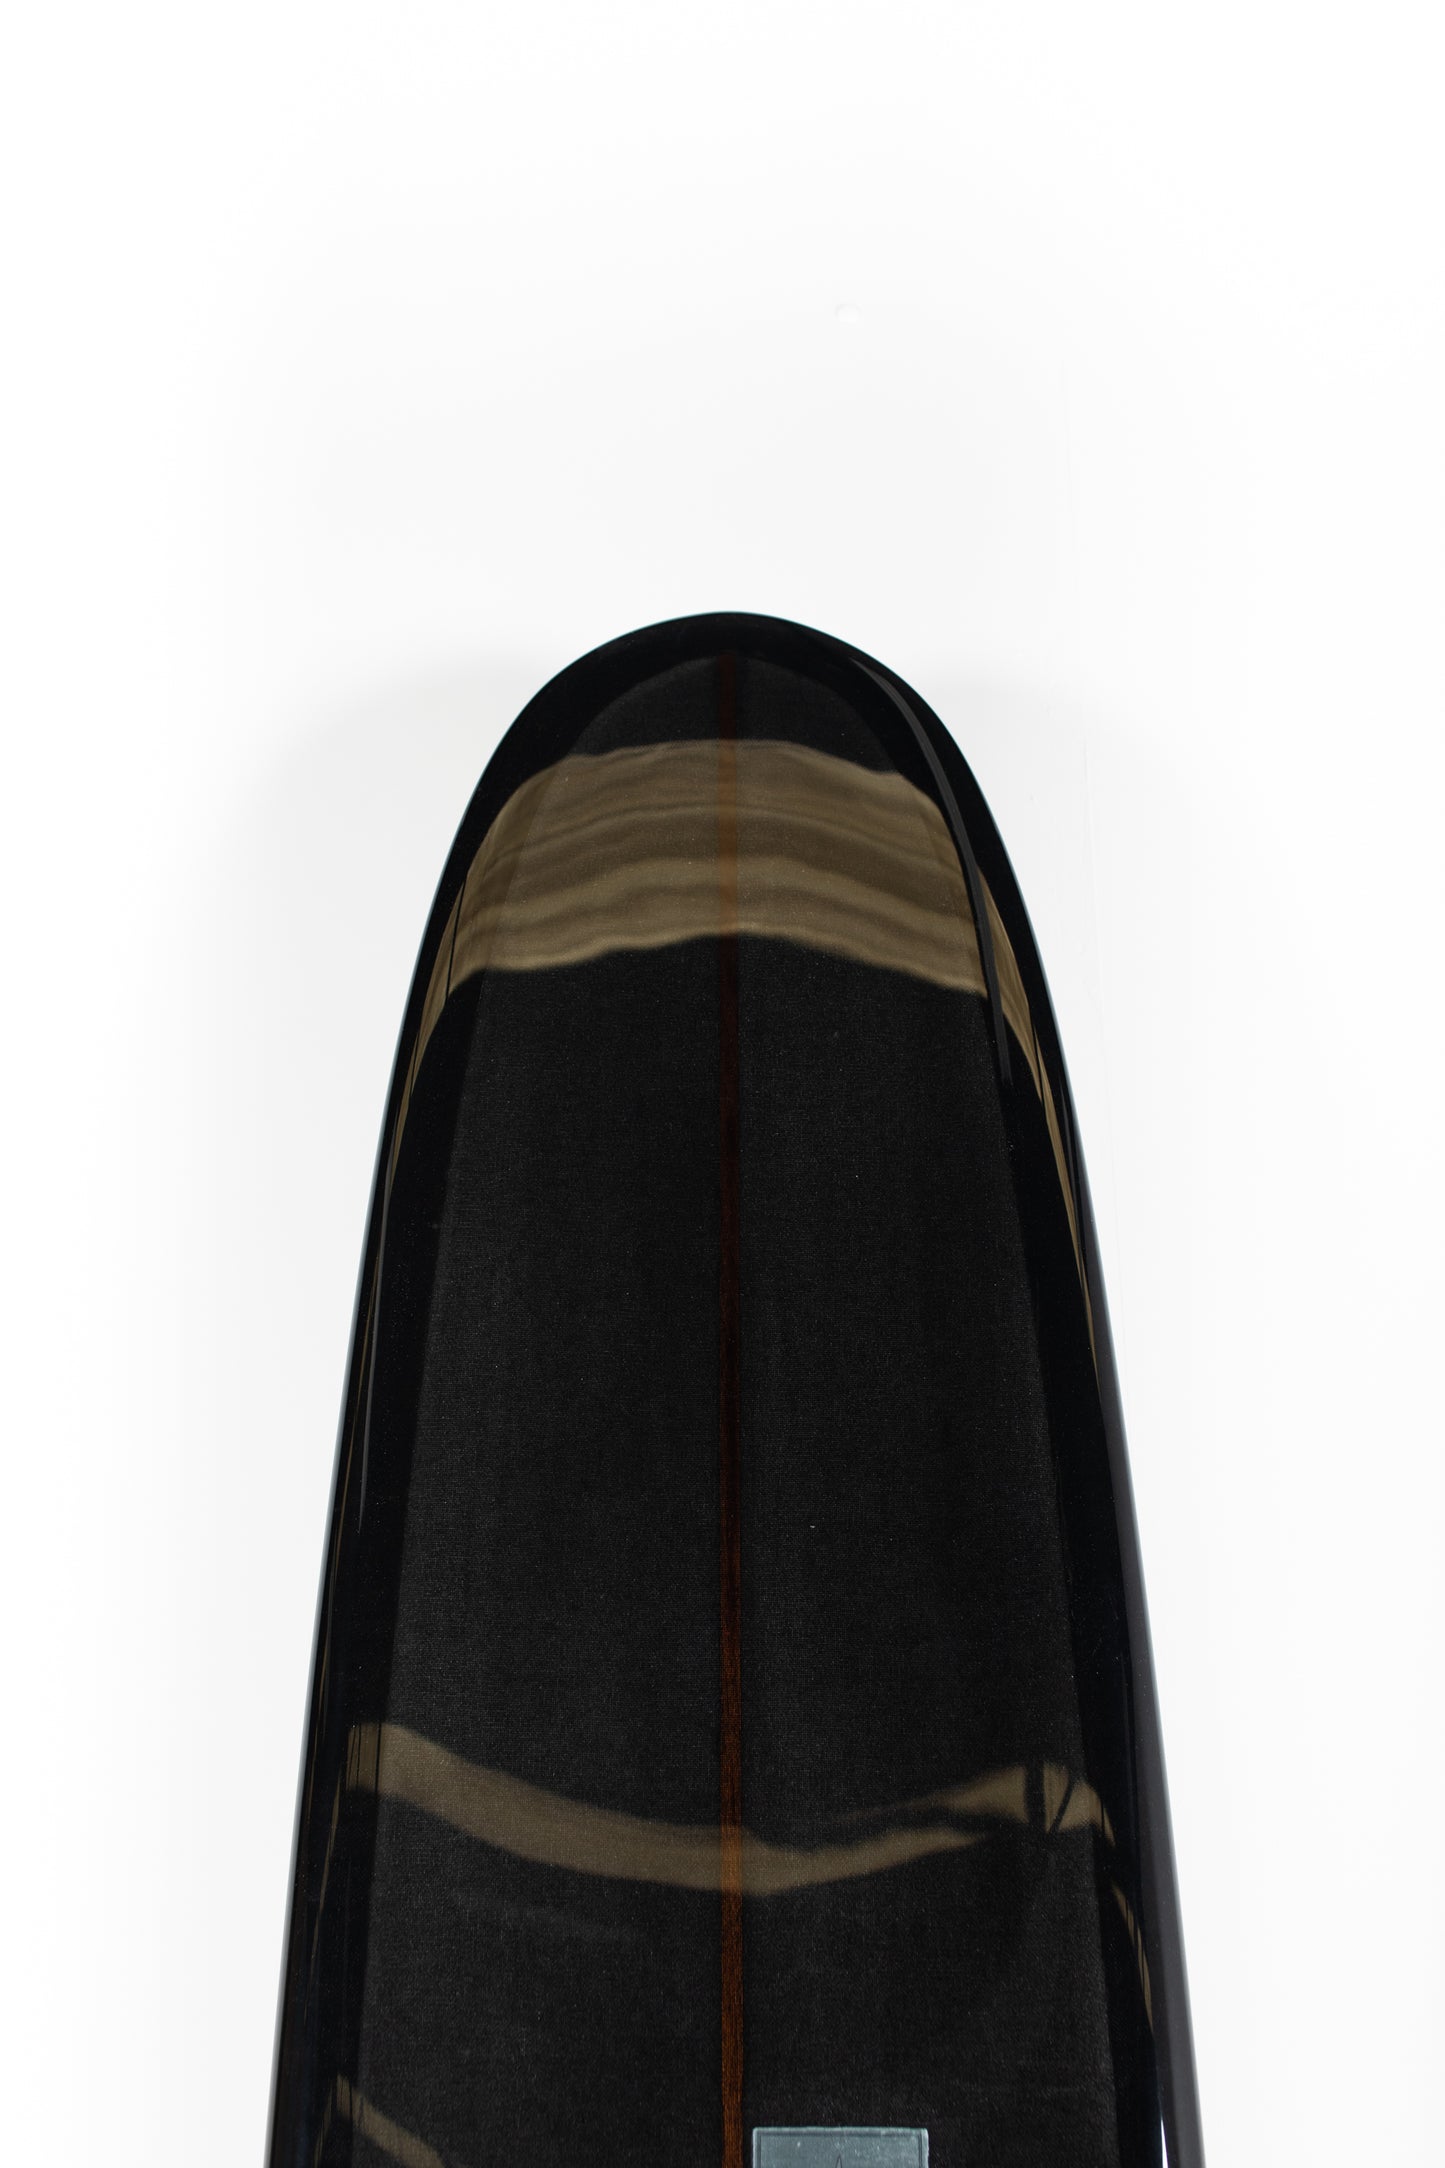 
                  
                    Pukas Surf Shop - Christenson Surfboard  - DEAD SLED by Chris Christenson - 9'0” x 22 1/2 x 2 13/16 - CX03184
                  
                